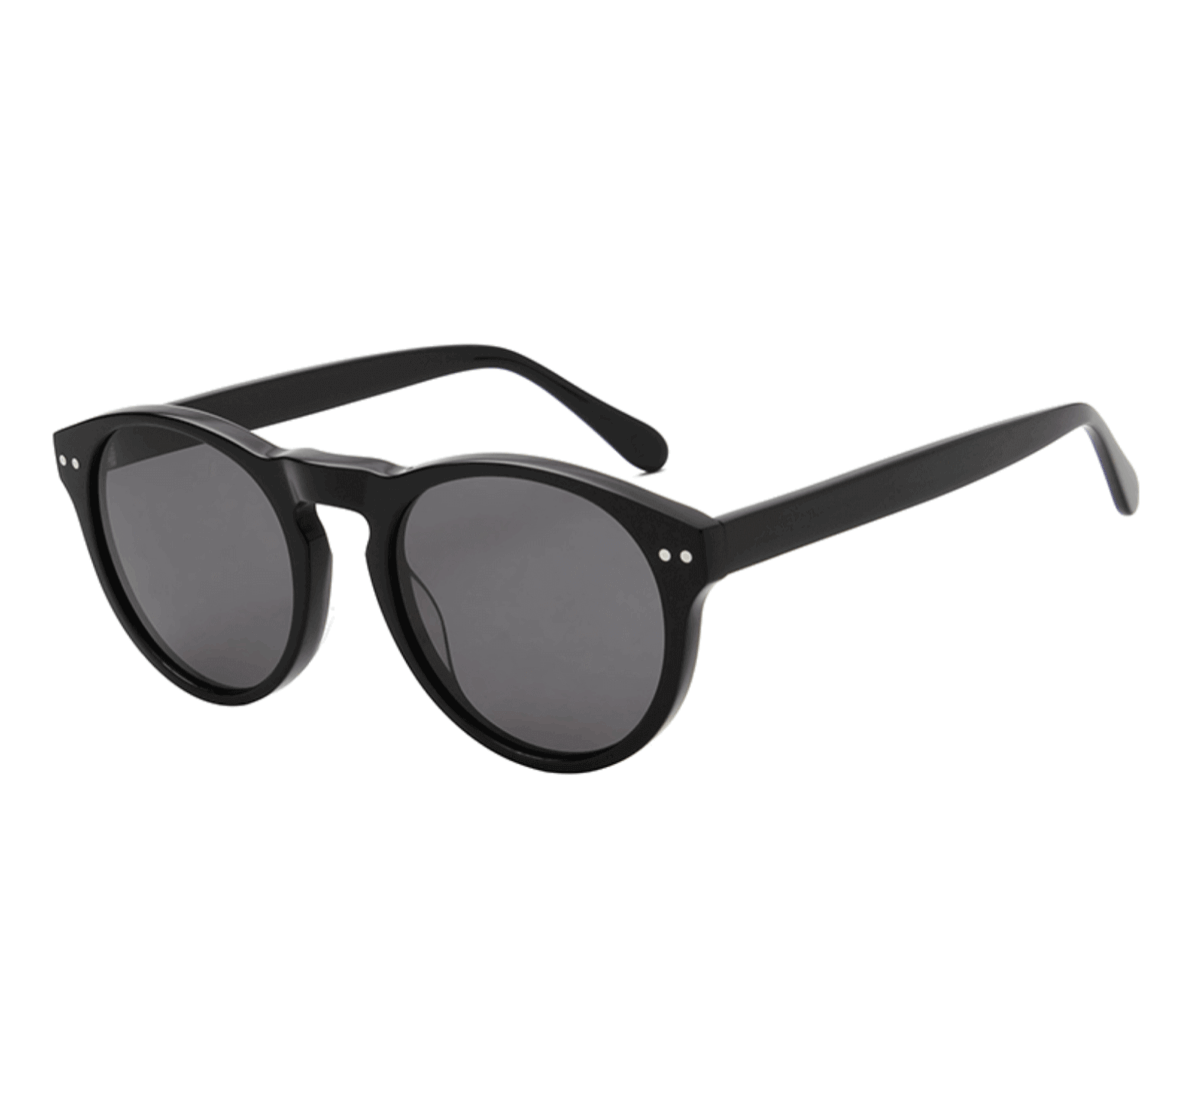 round acetate sunglasses, acetate sunglasses manufacturer, Chinese sunglasses manufacturers, China eyewear factory, glasses supplier